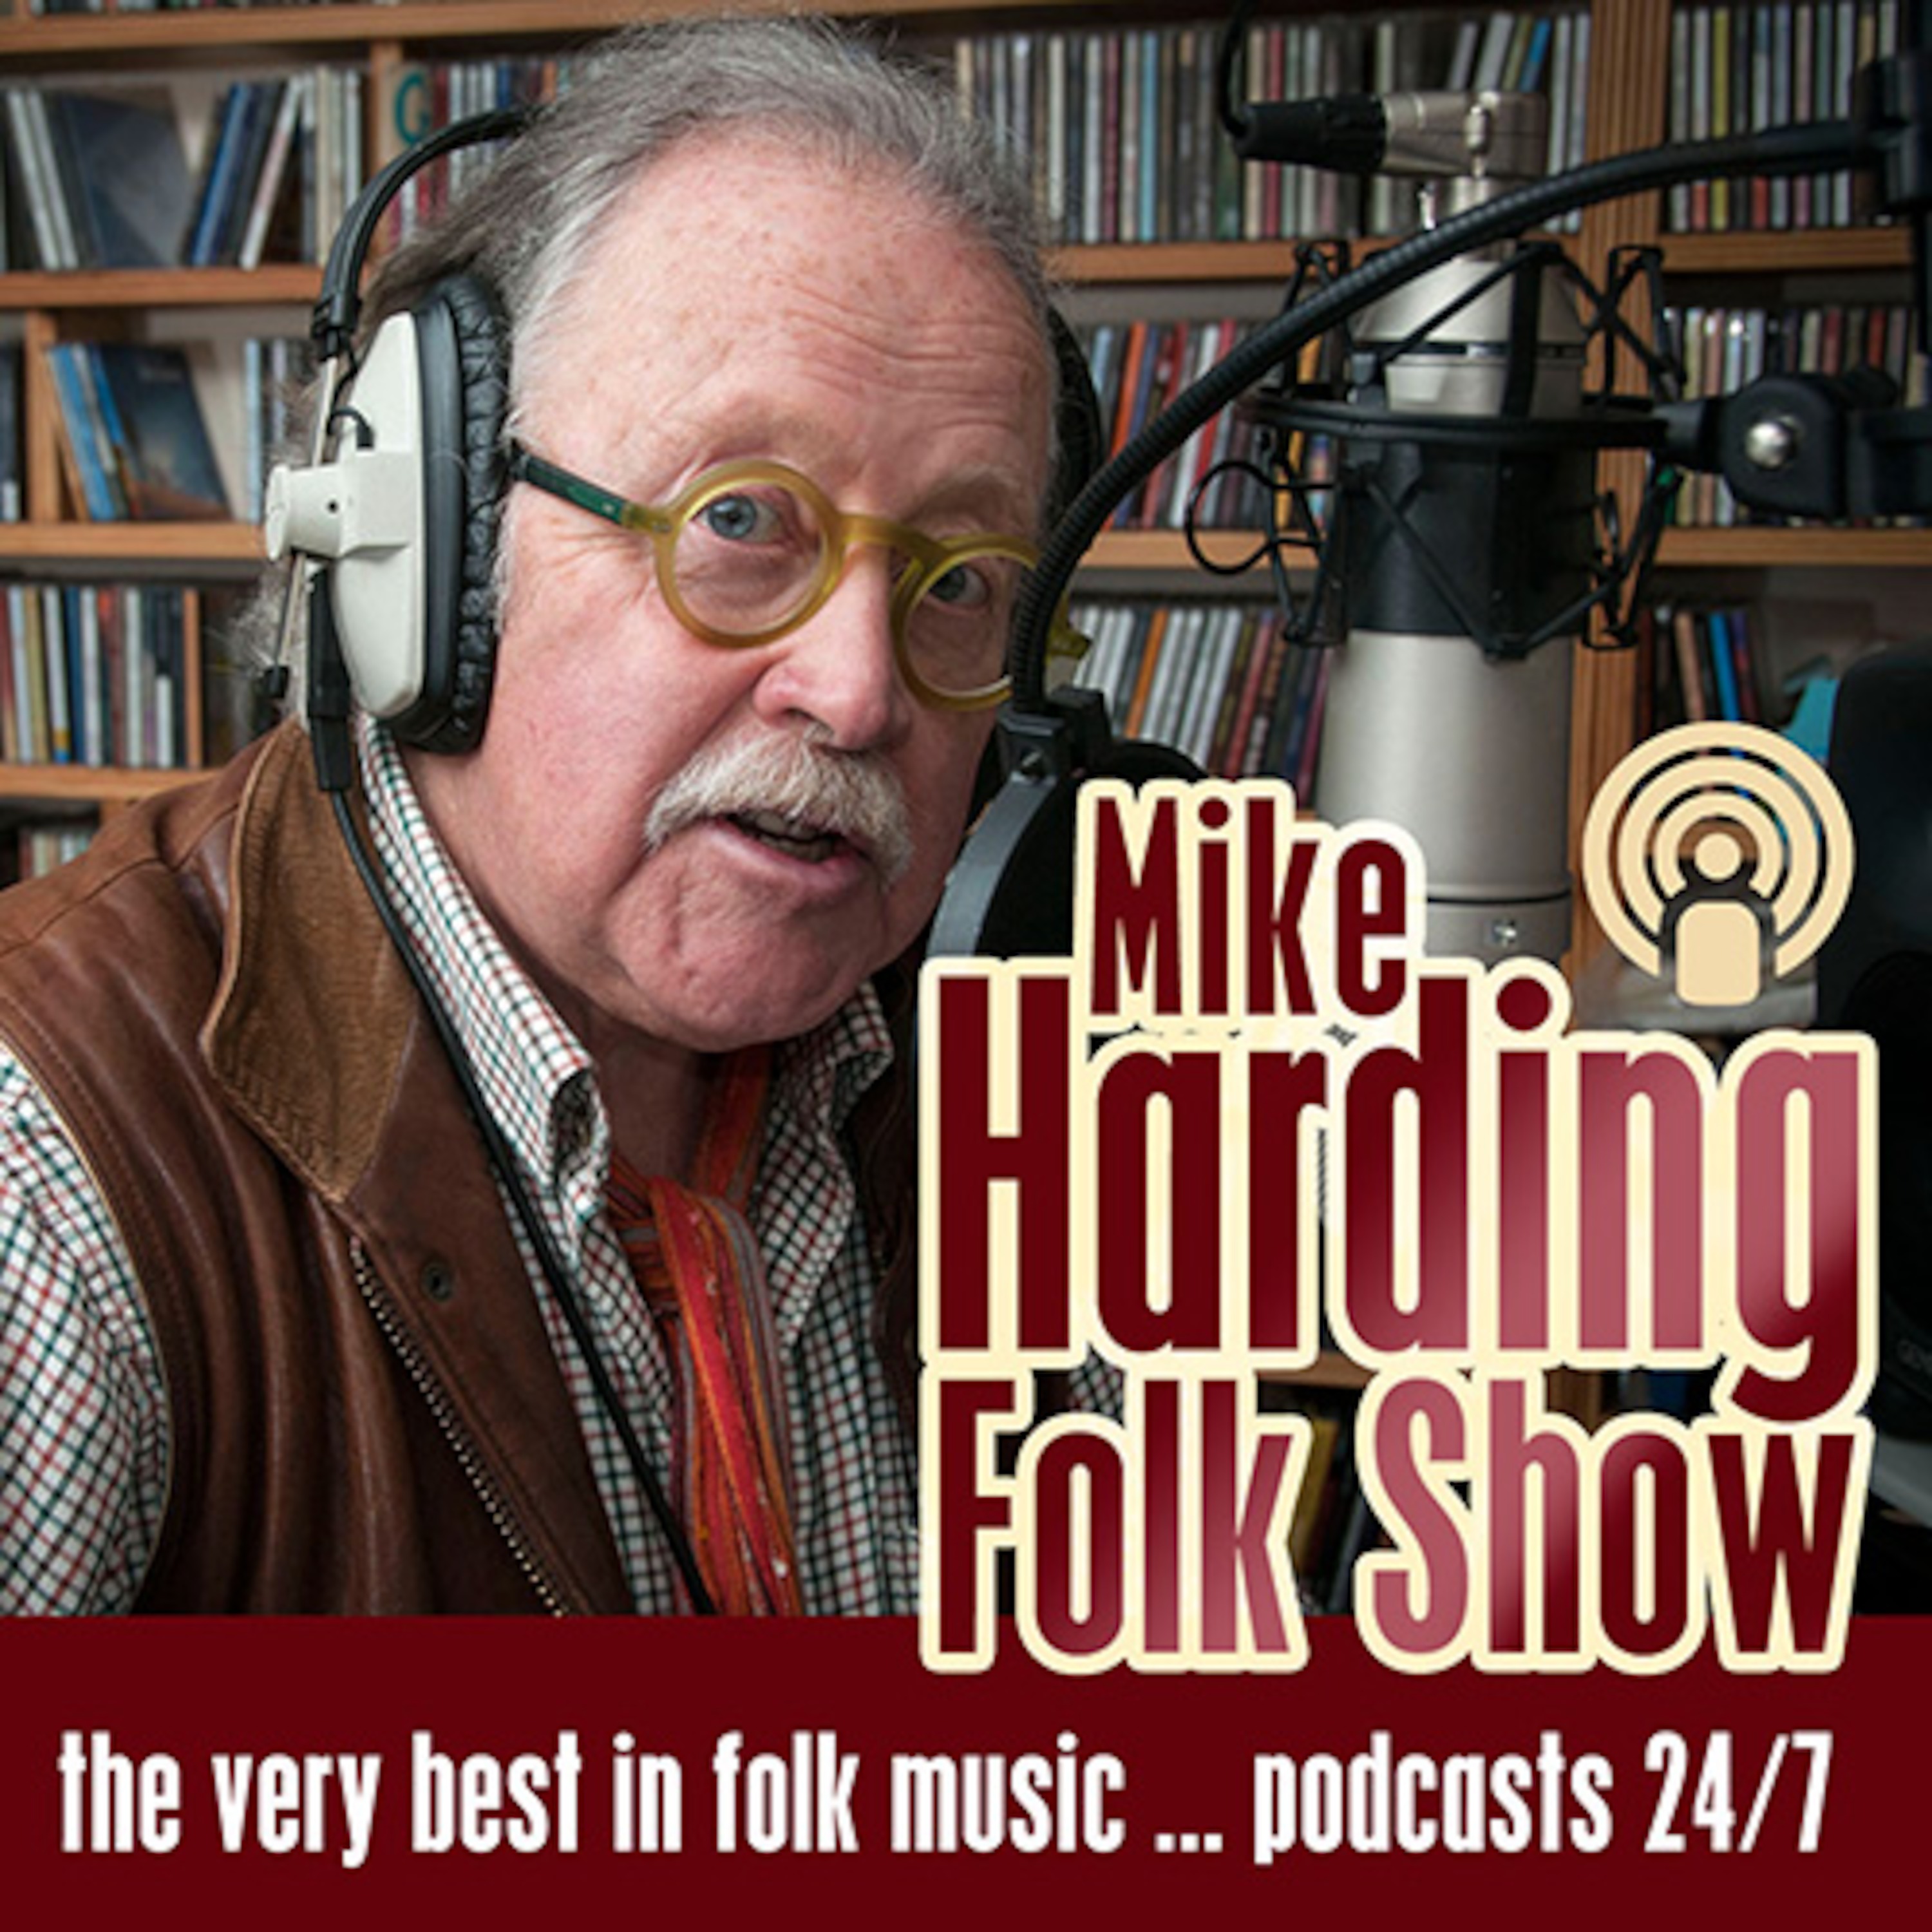 Mike Harding Folk Show 269